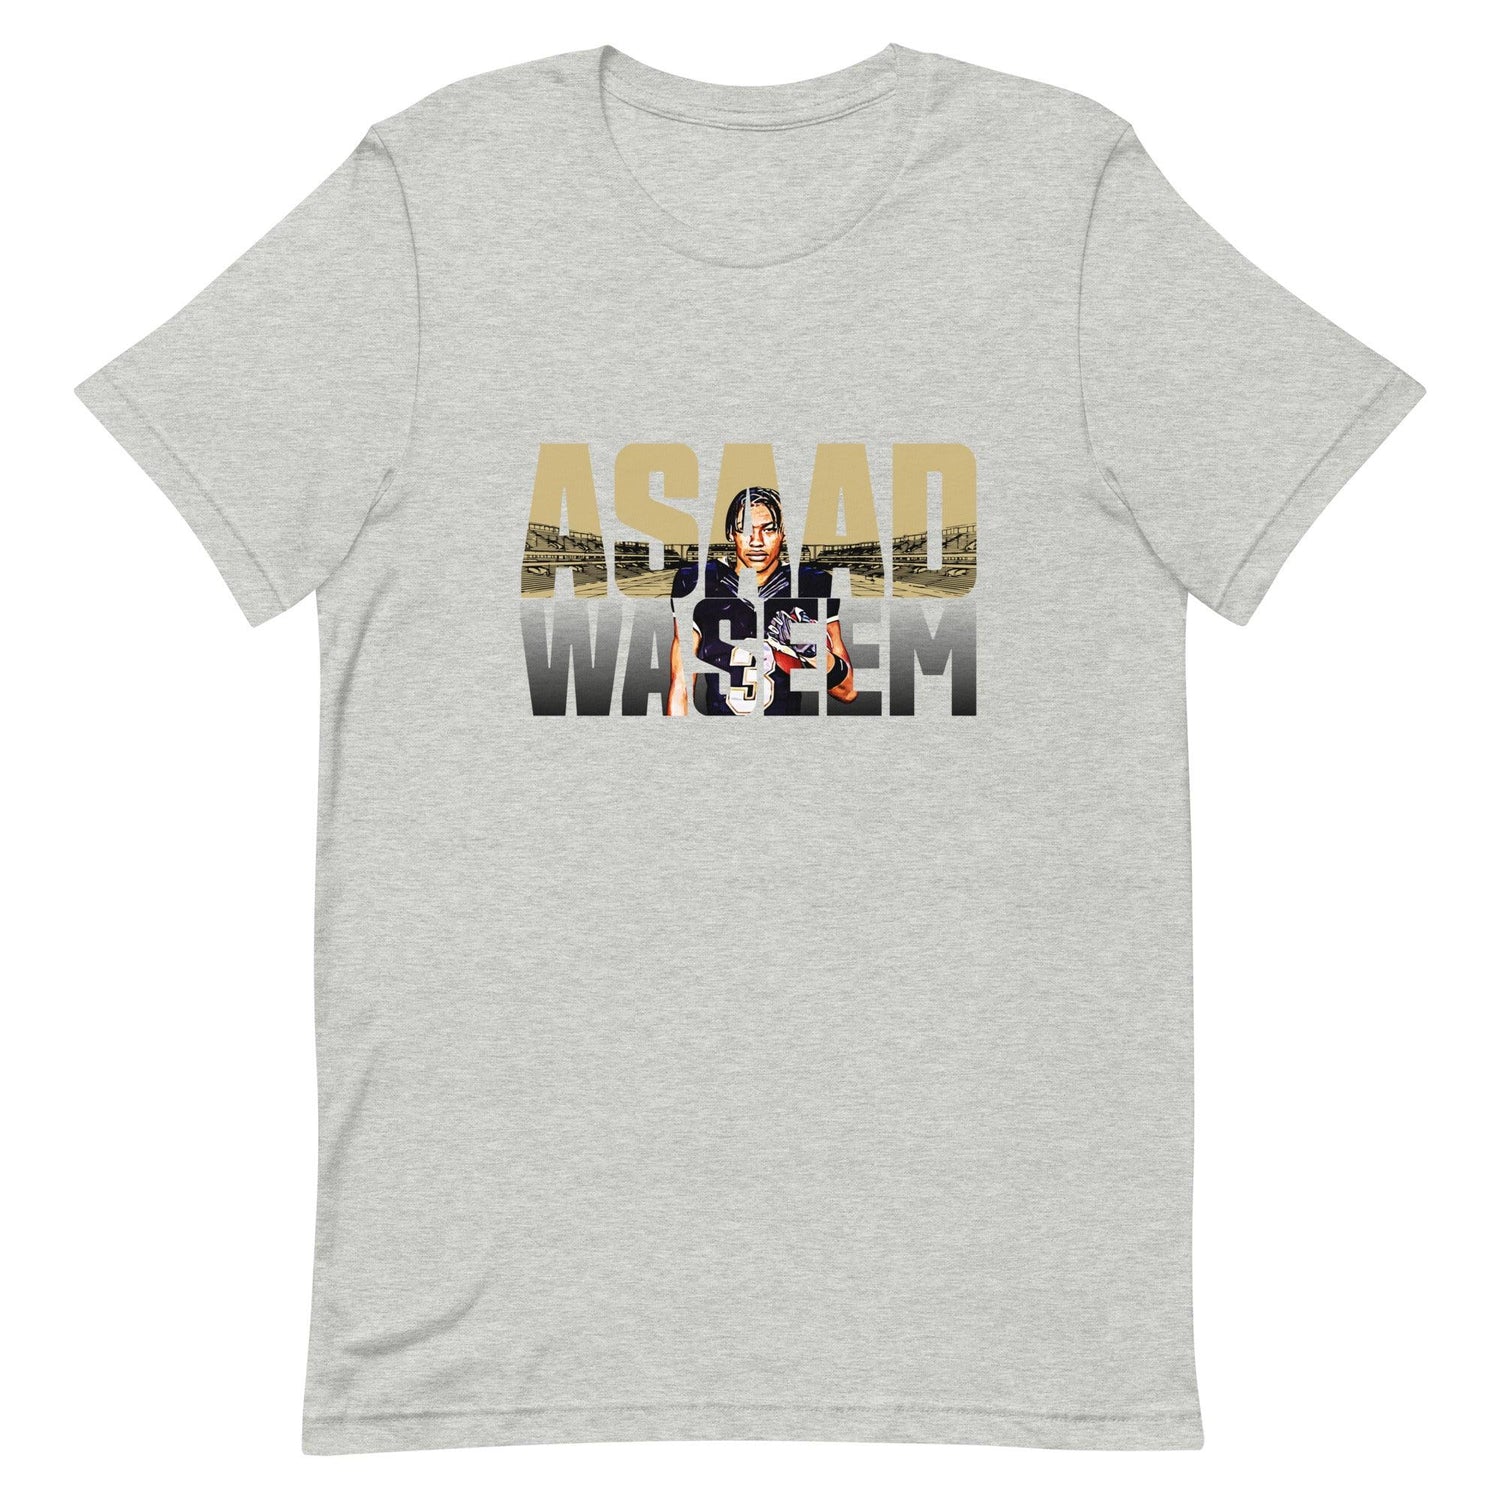 Asaad Waseem "Gameday" t-shirt - Fan Arch